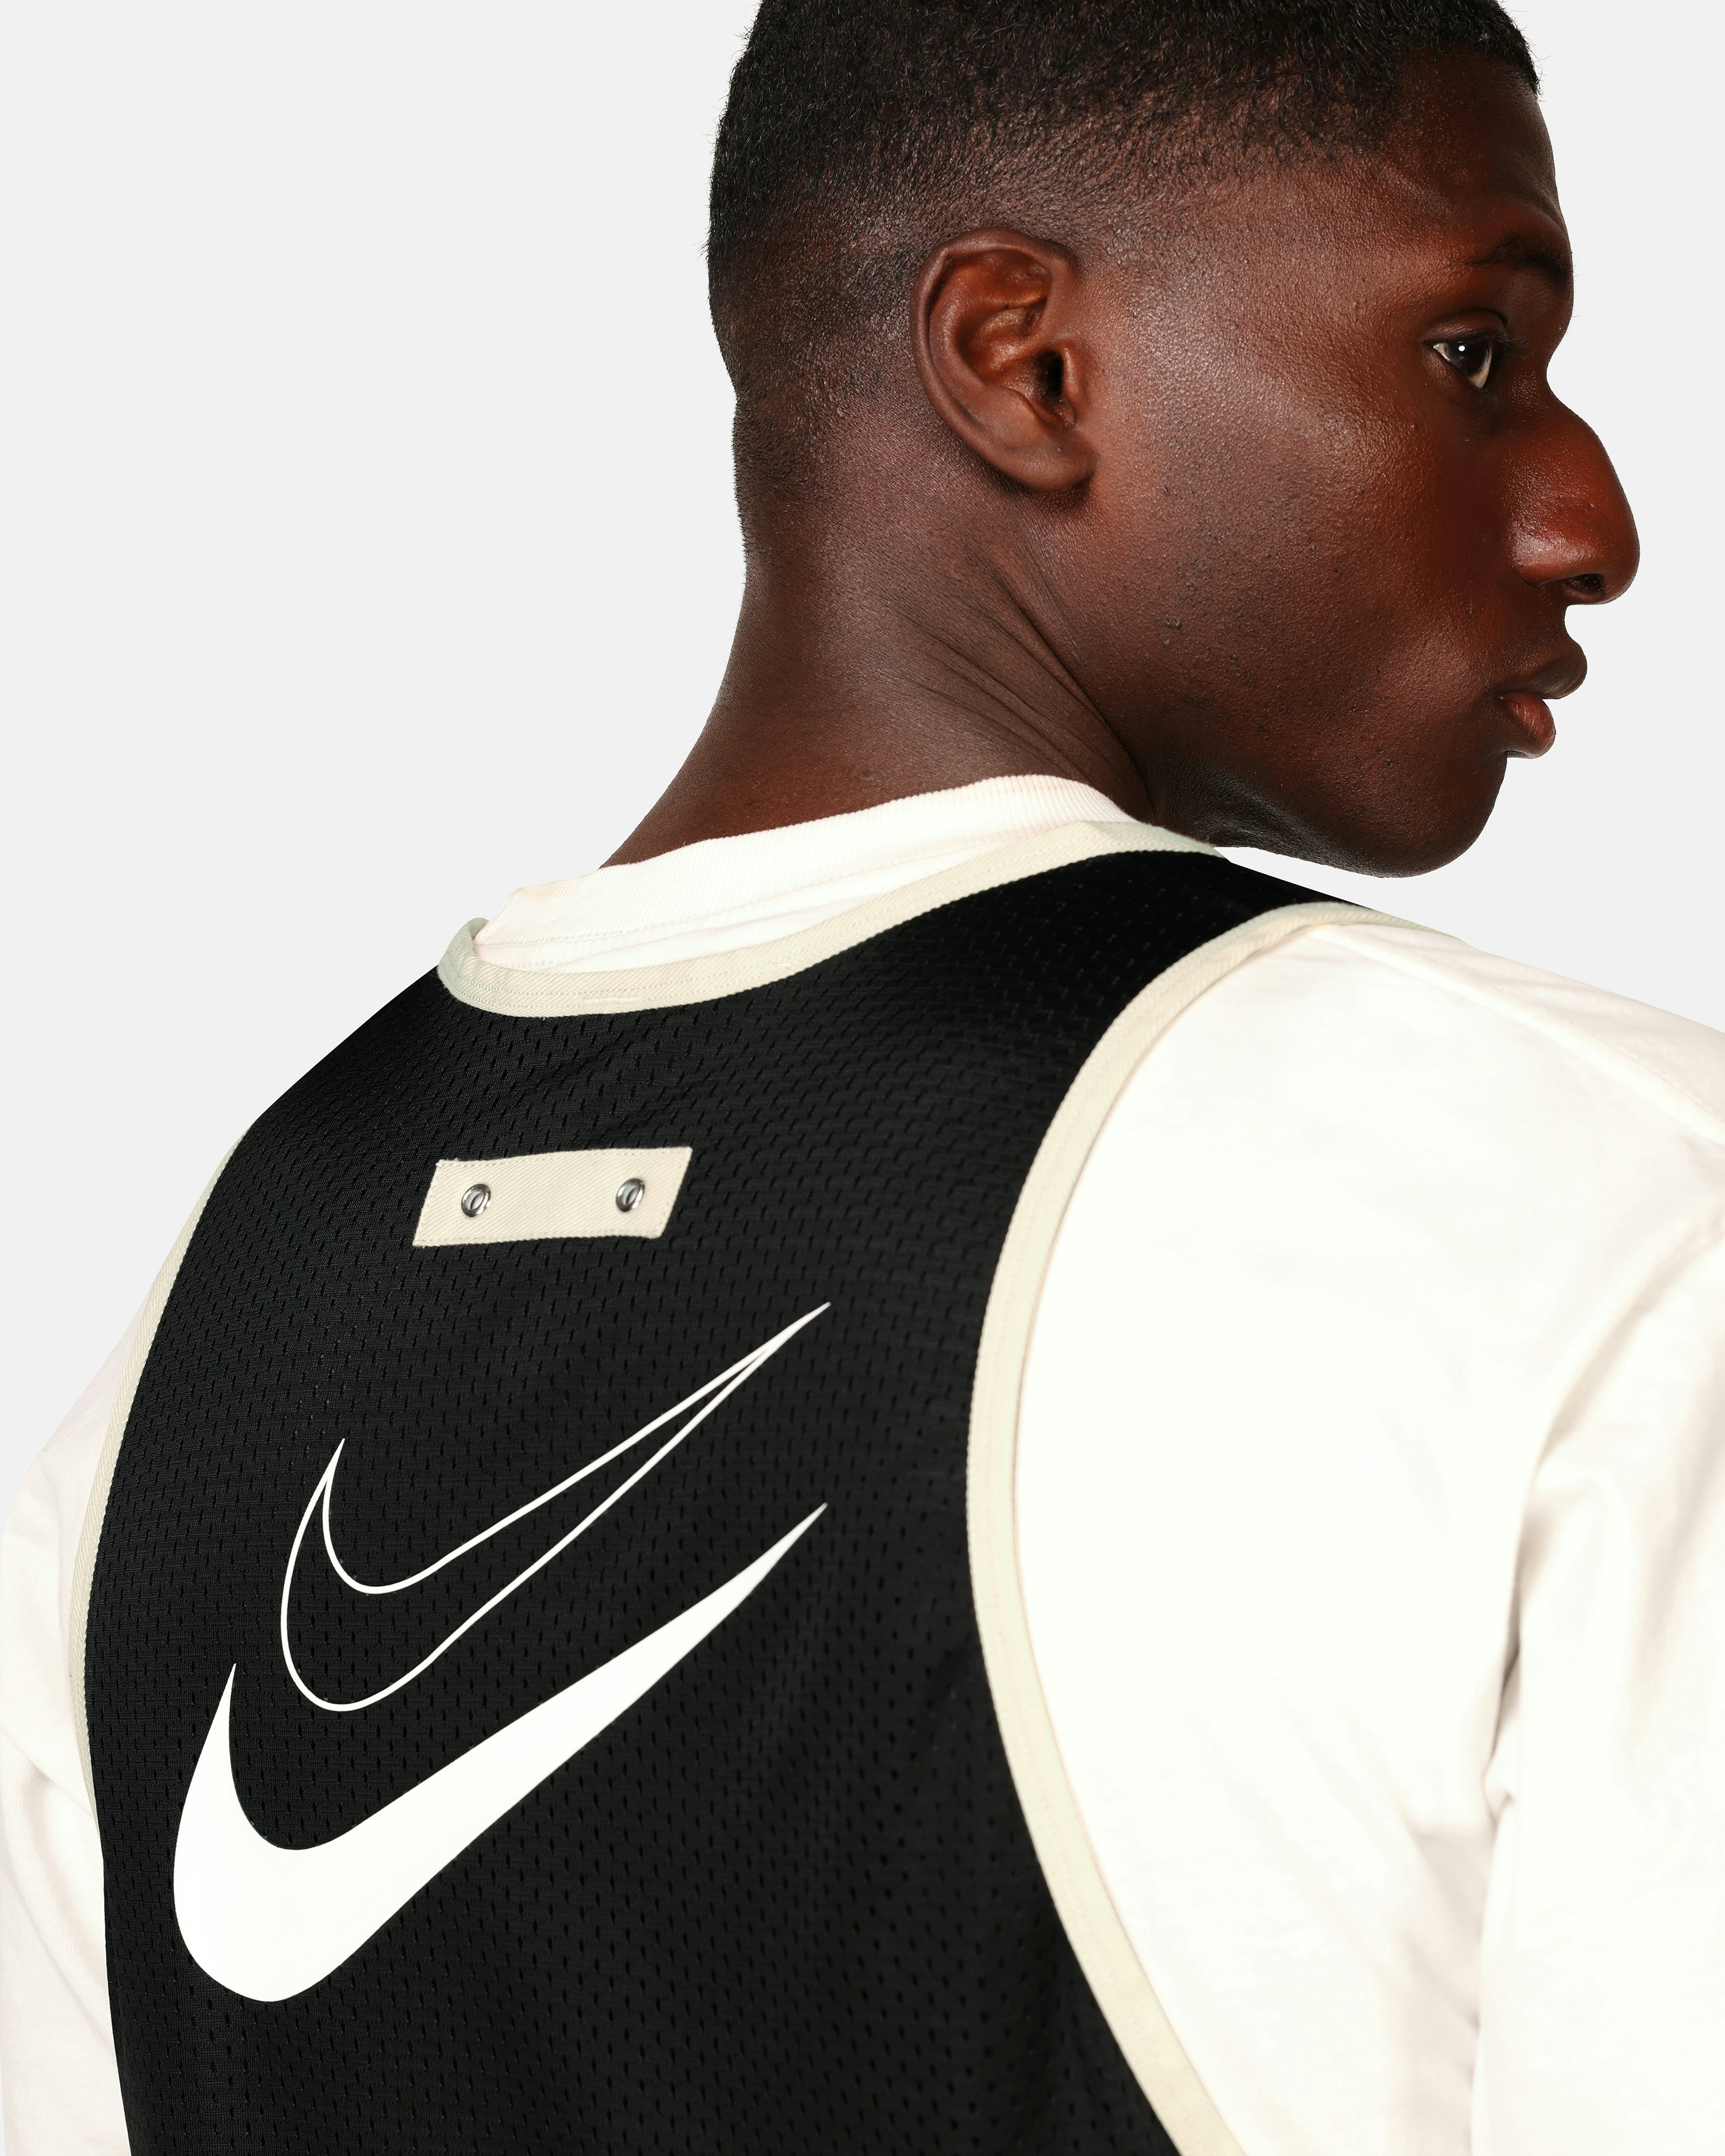 Kevin Durant Men's Nike Dri-FIT Mesh Basketball Jersey